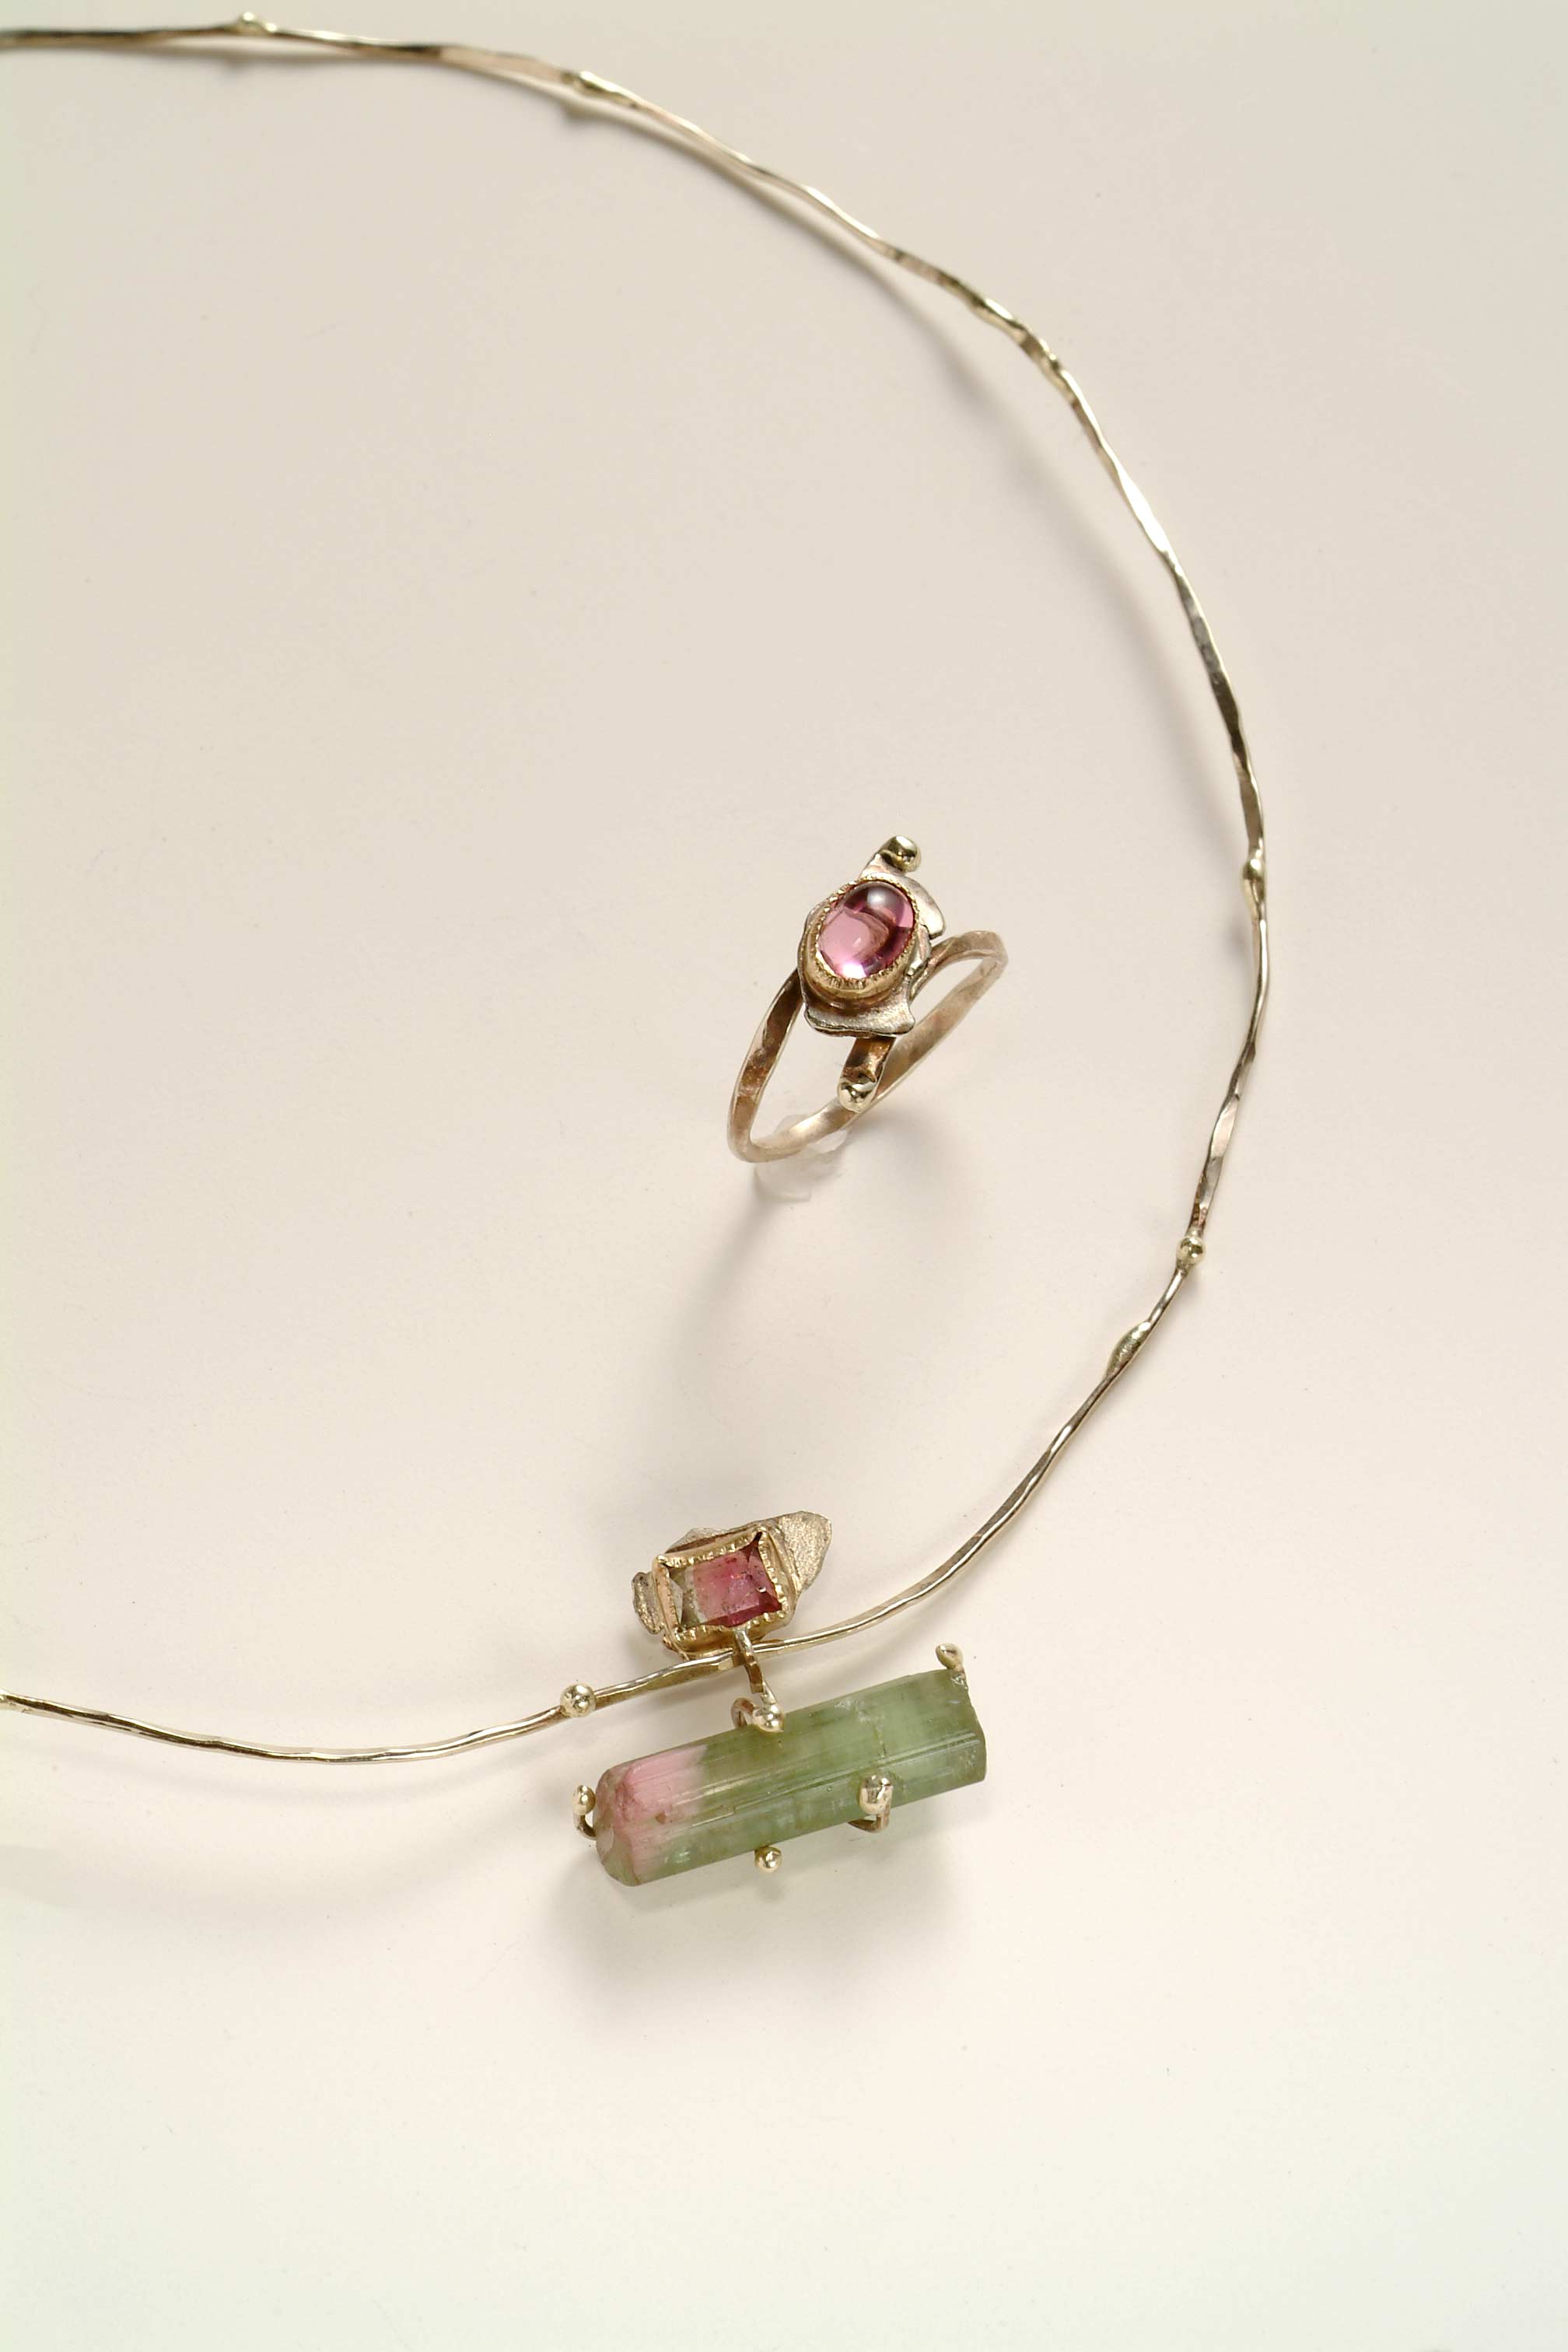 Sweet Dreams 2 スイートドリームの写真 (薄緑色とピンクのバイカラートルマリンを使ったネックレスとピンクトルマリンの指輪)